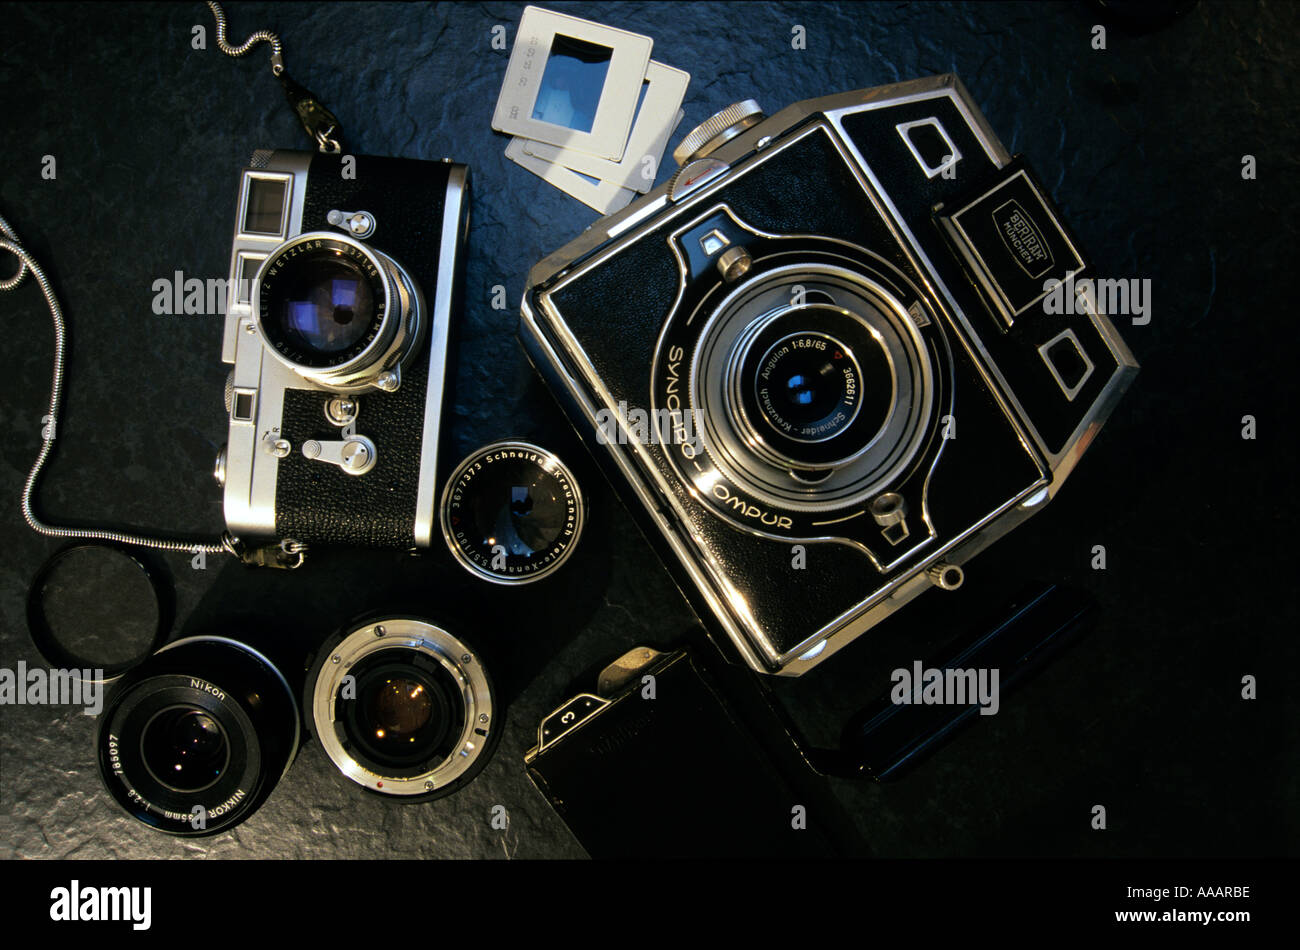 Classic German analogue cameras - a 35mm Leica M3 and a 6x9 cm Bertram press camera. Stock Photo